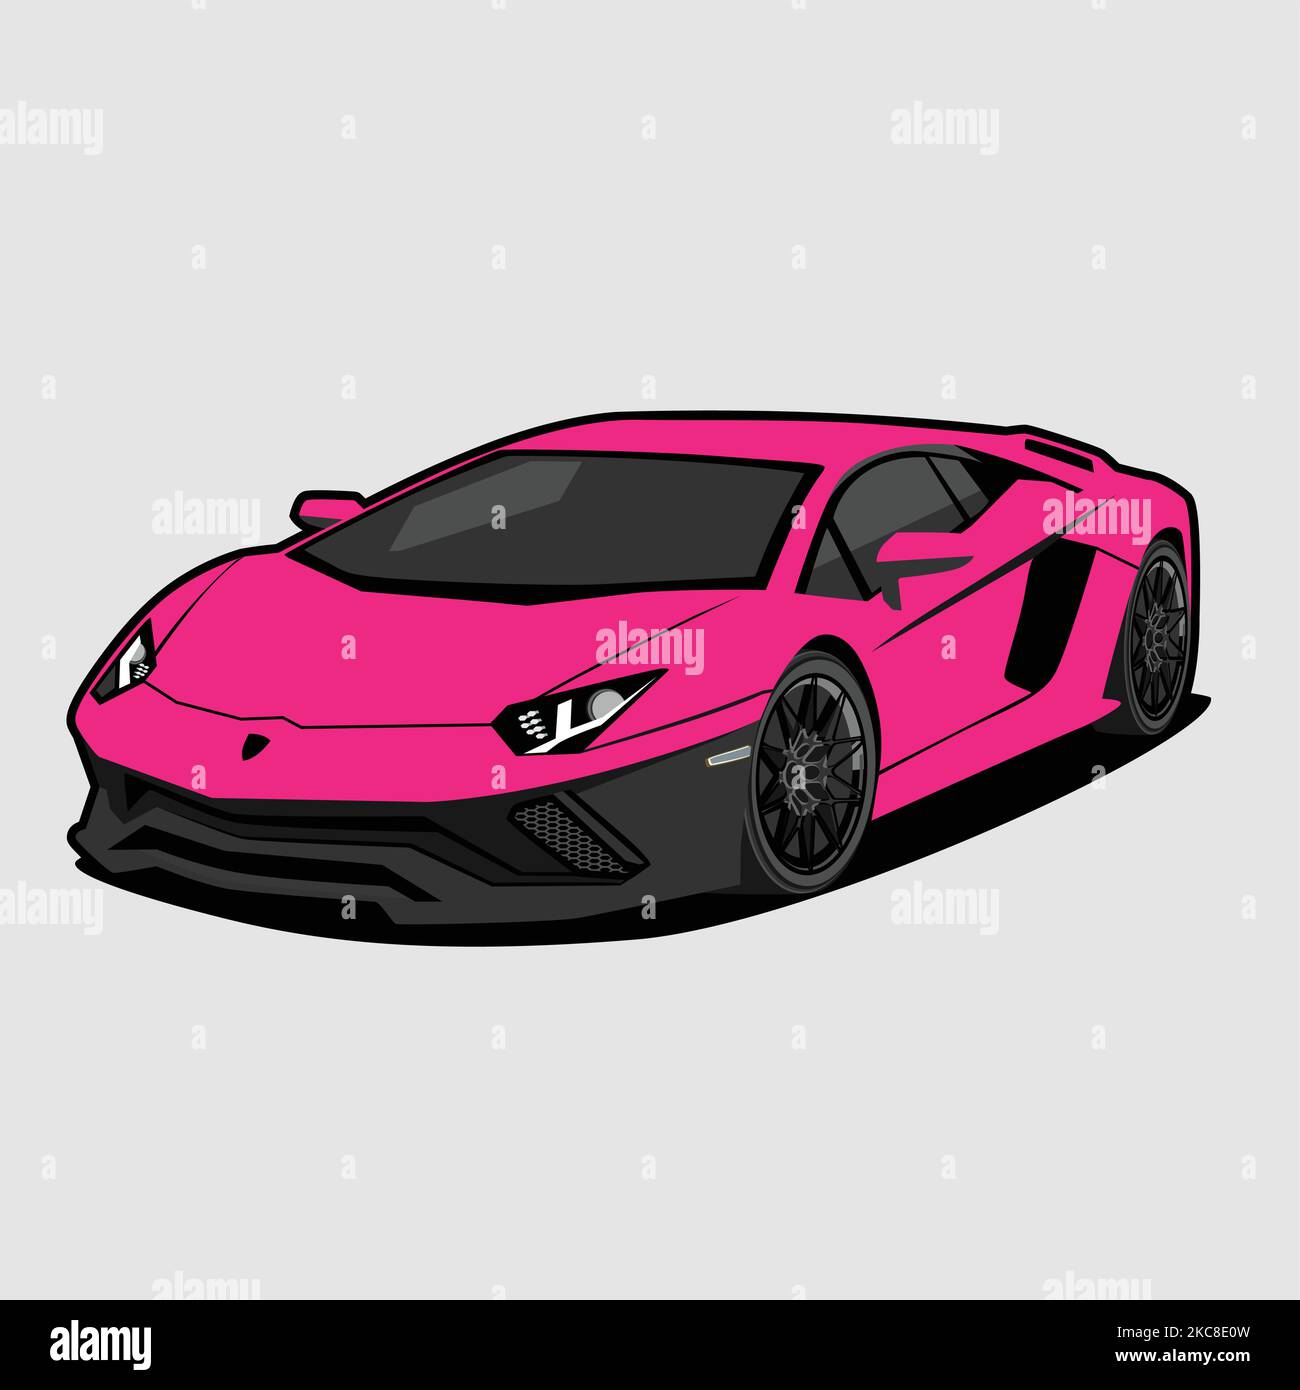 Lamborghini aventador eps format. High resolution vector file. Download it Now Stock Vector